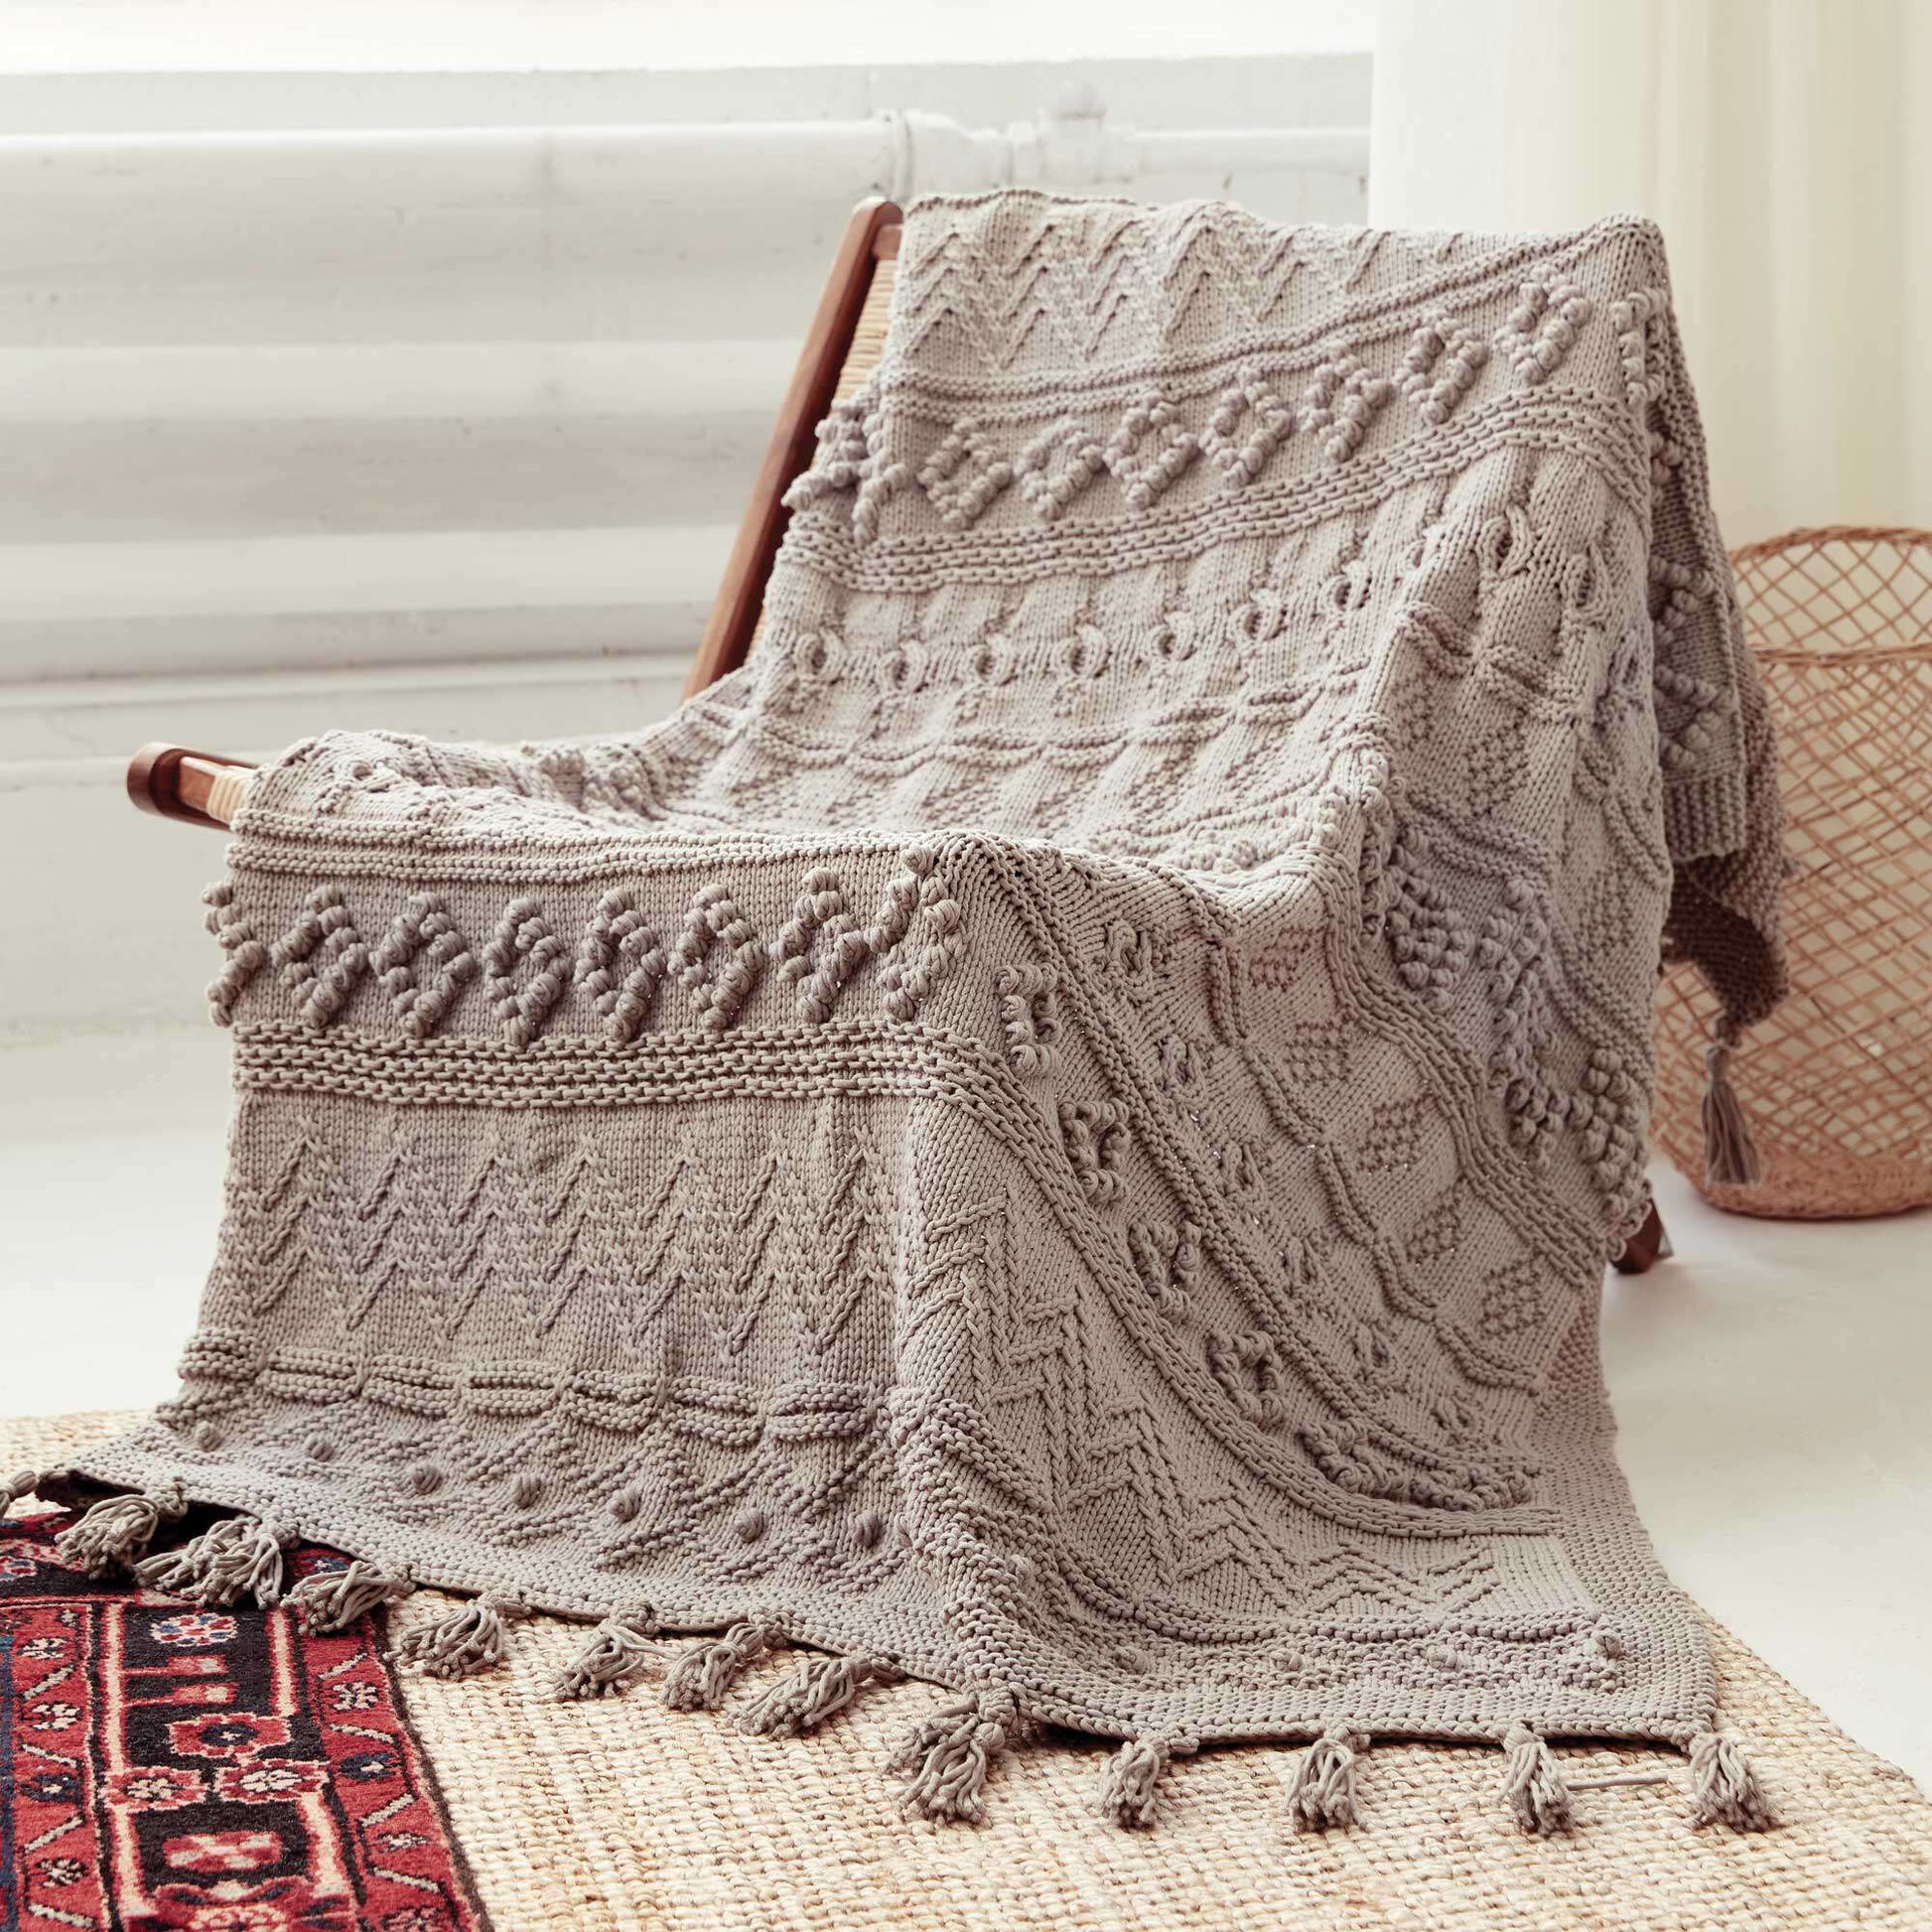 Bernat Sampler Knit Blanket Knit Blanket made in Bernat Maker Home Dec yarn